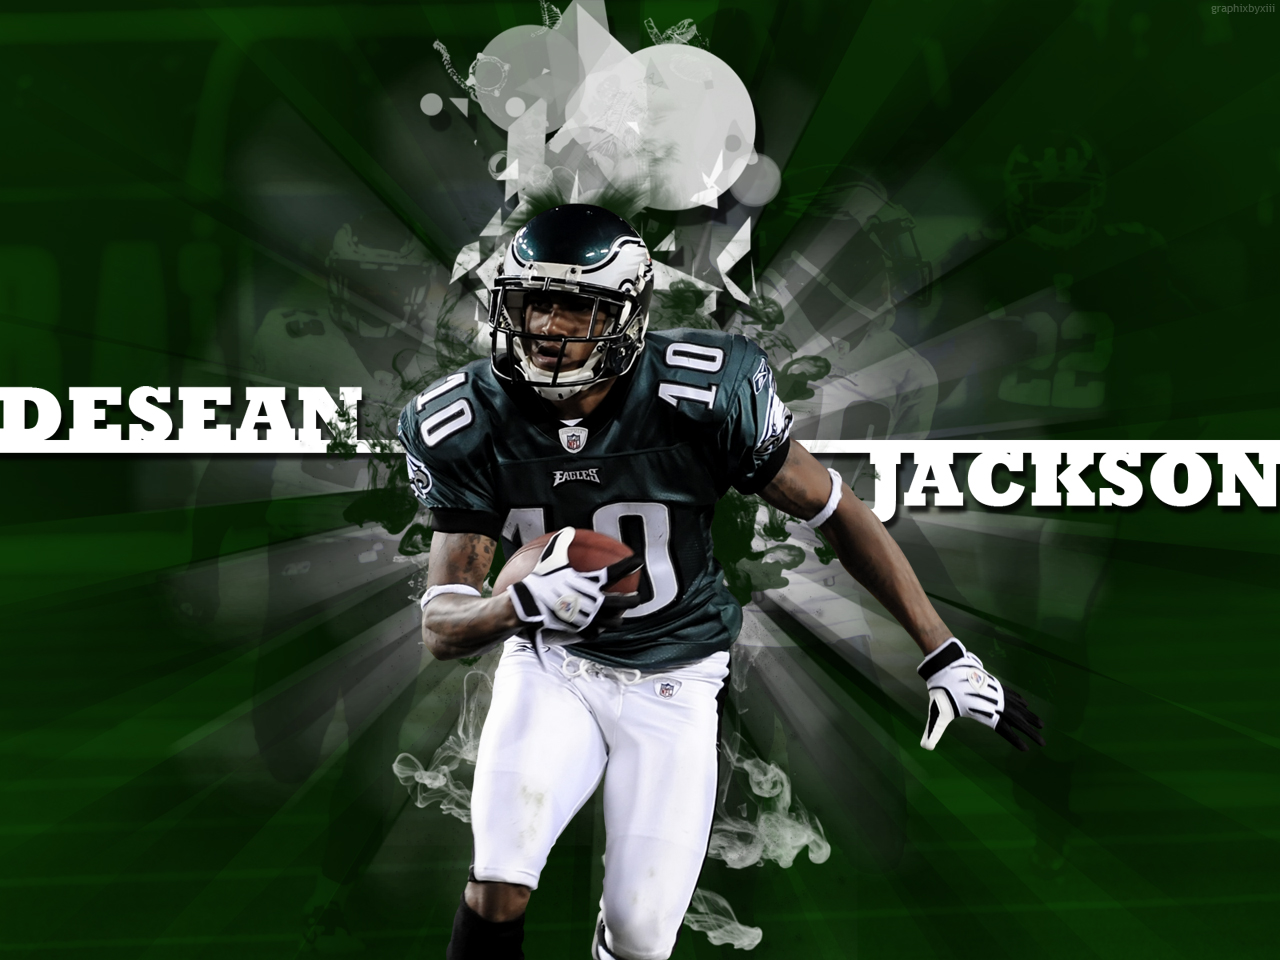 Philadelphia Eagles Wallpaper Desean Jackson Jackson01 1280wp